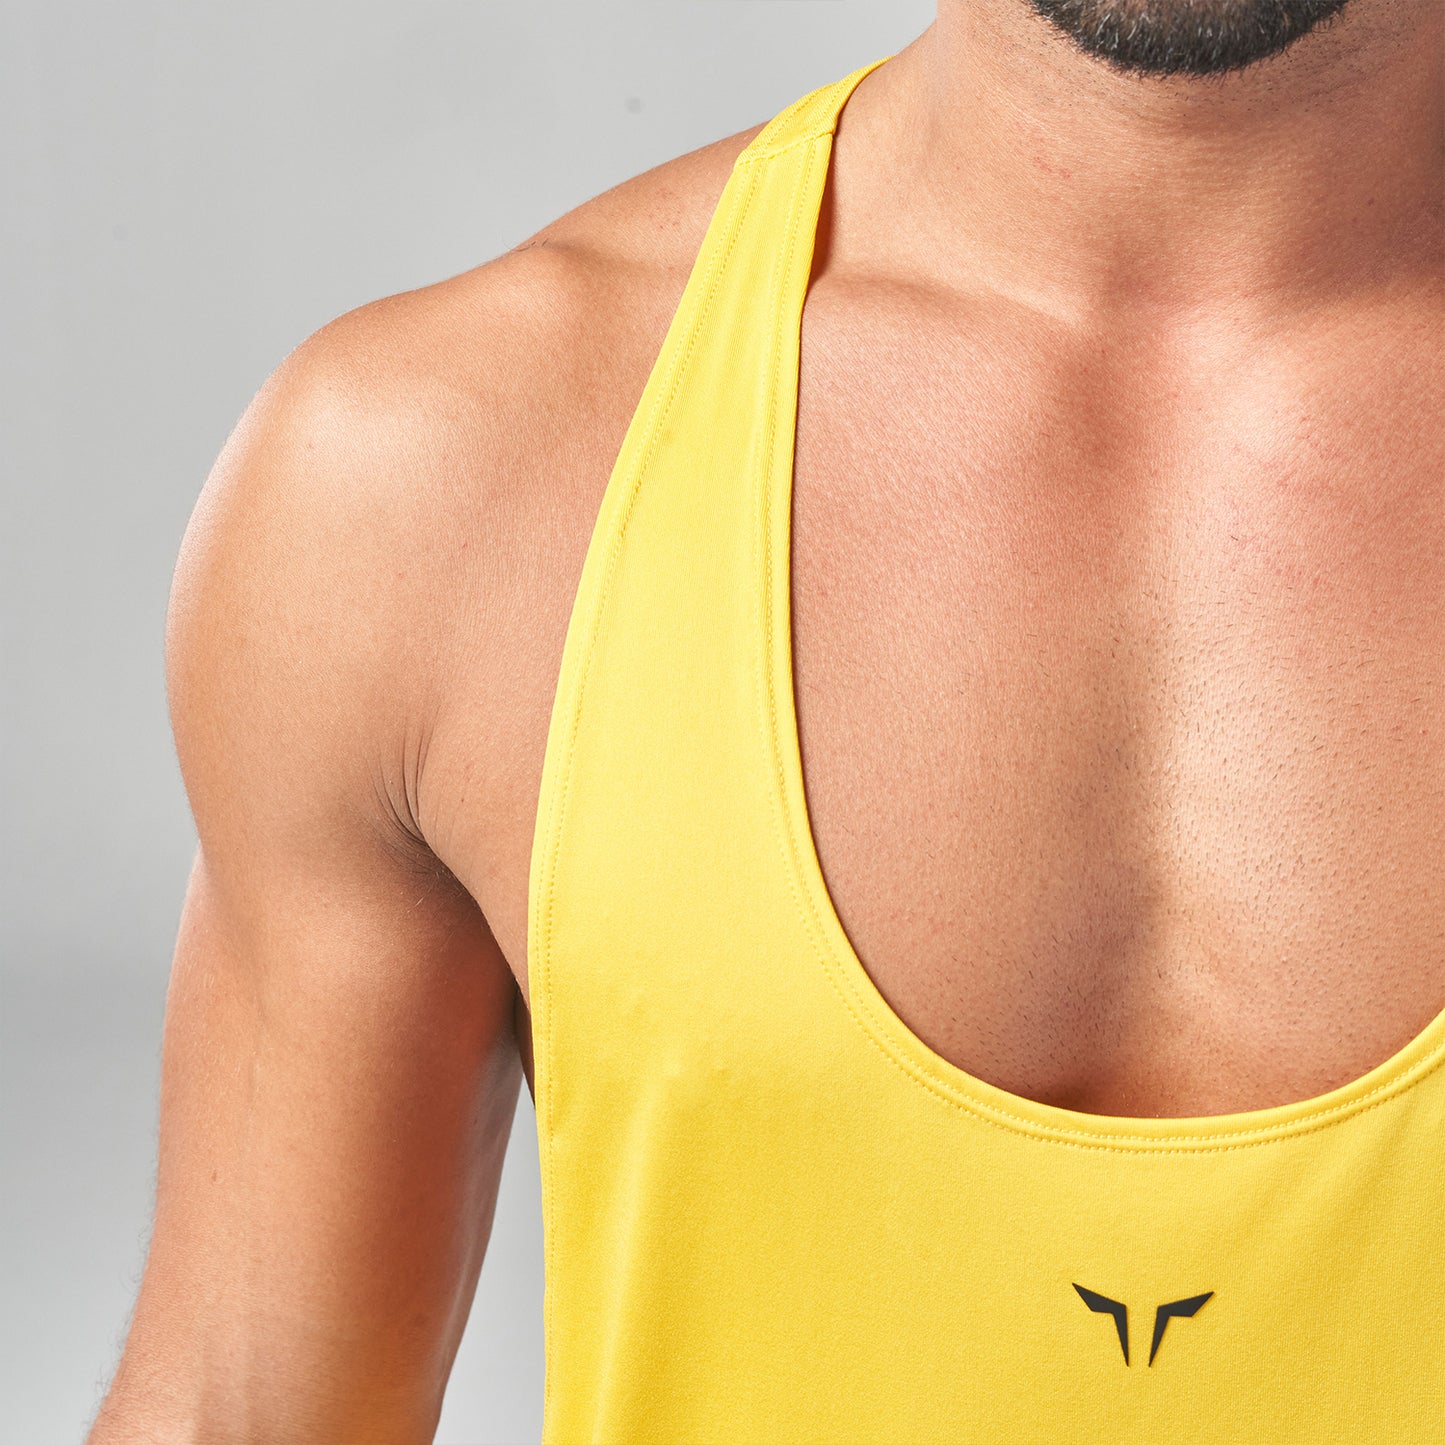 squatwolf-gym-wear-essential-gym-stringer-yellow-stringer-vests-for-men